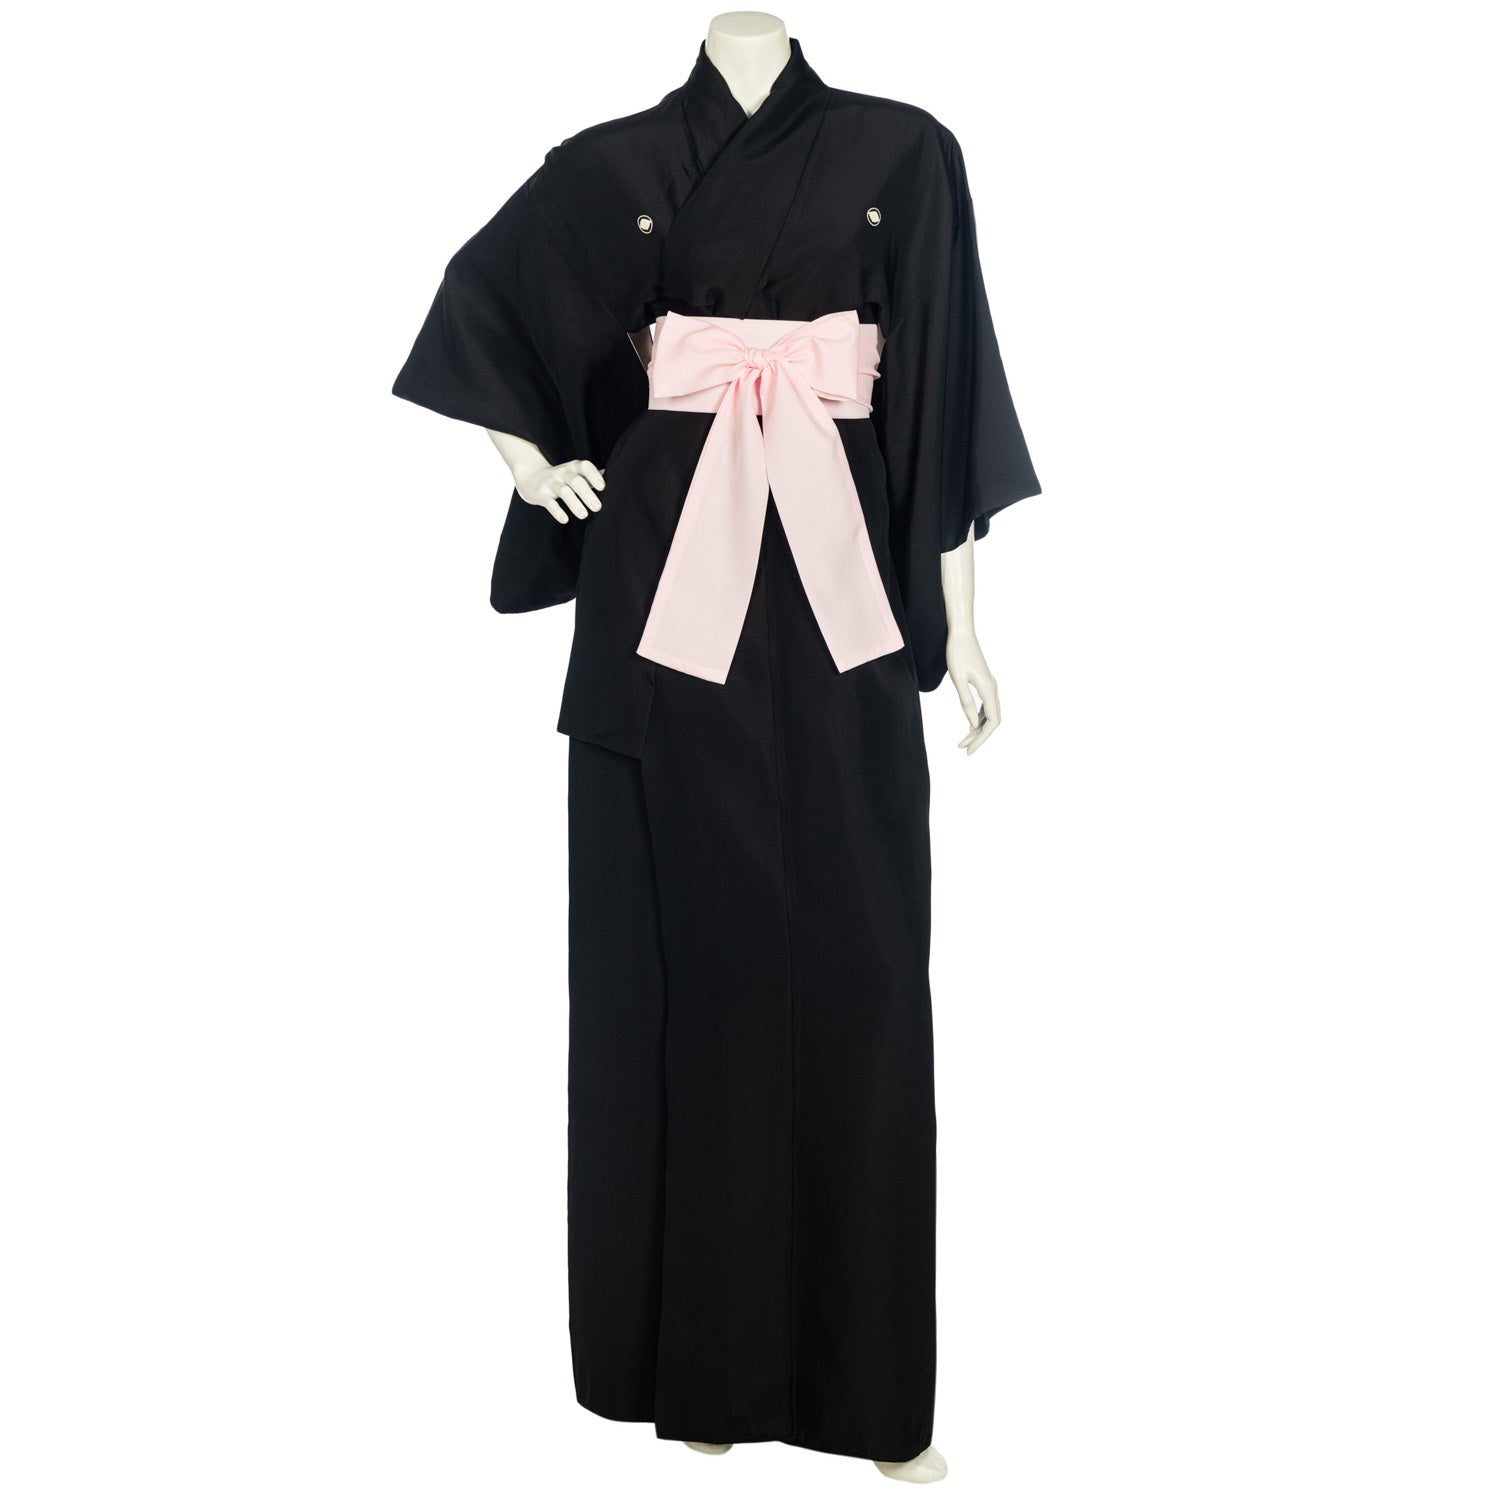 Kiku Kamon Vintage Japanese Kimono Robe